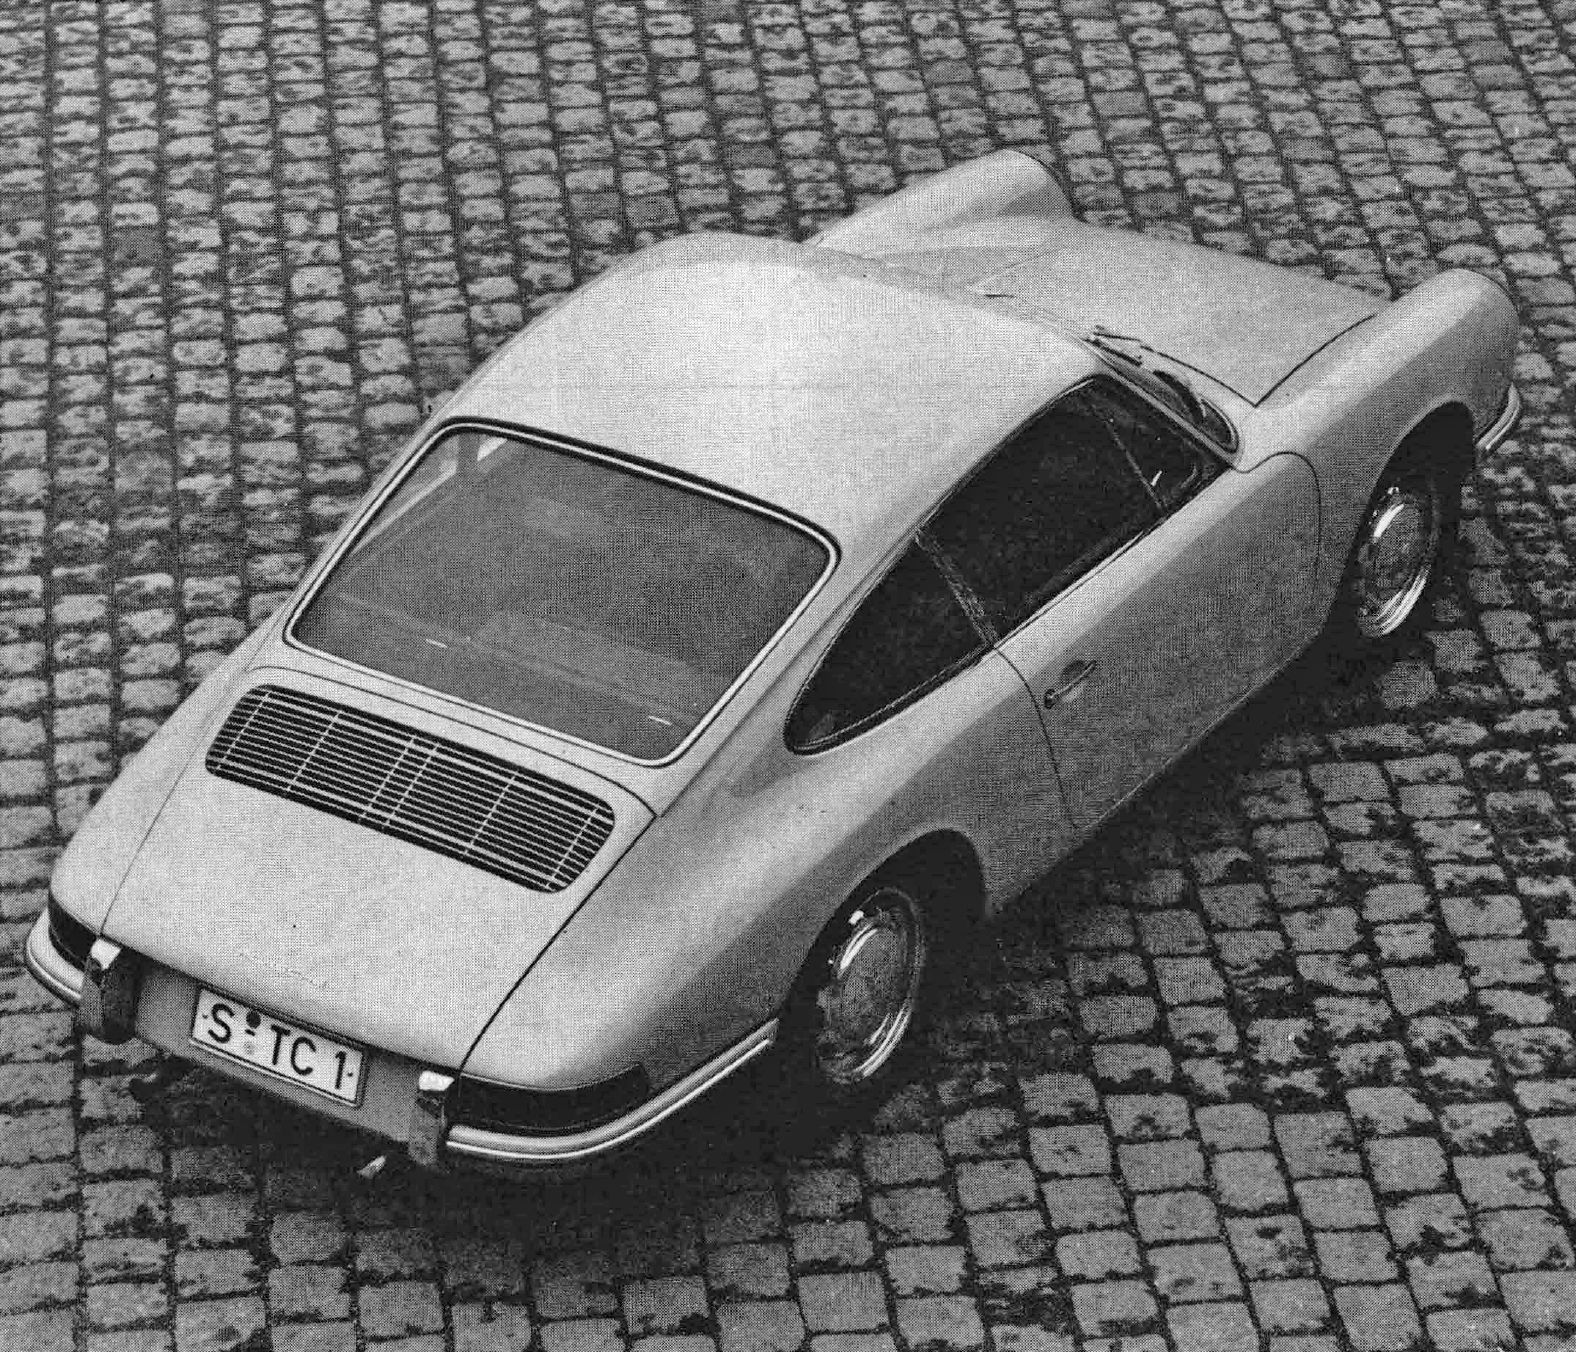 1965 Porsche 911 Test: The Stuff Legends Are Made Of